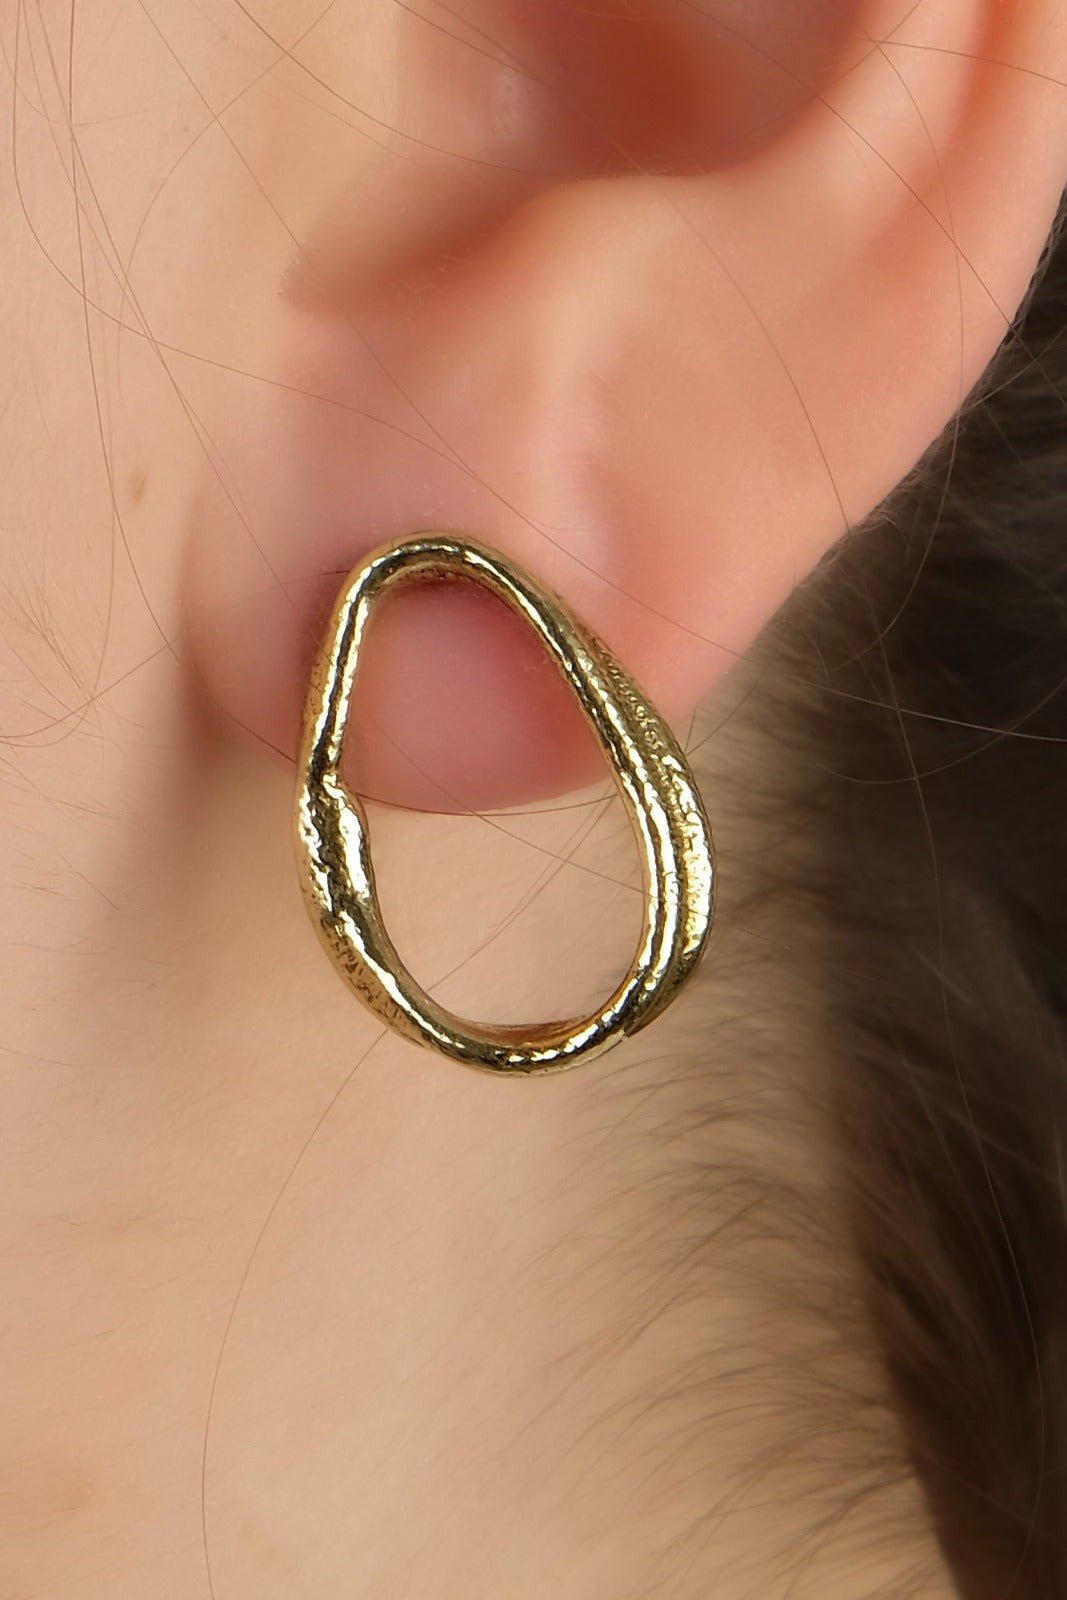 O’lava stud earrings golden